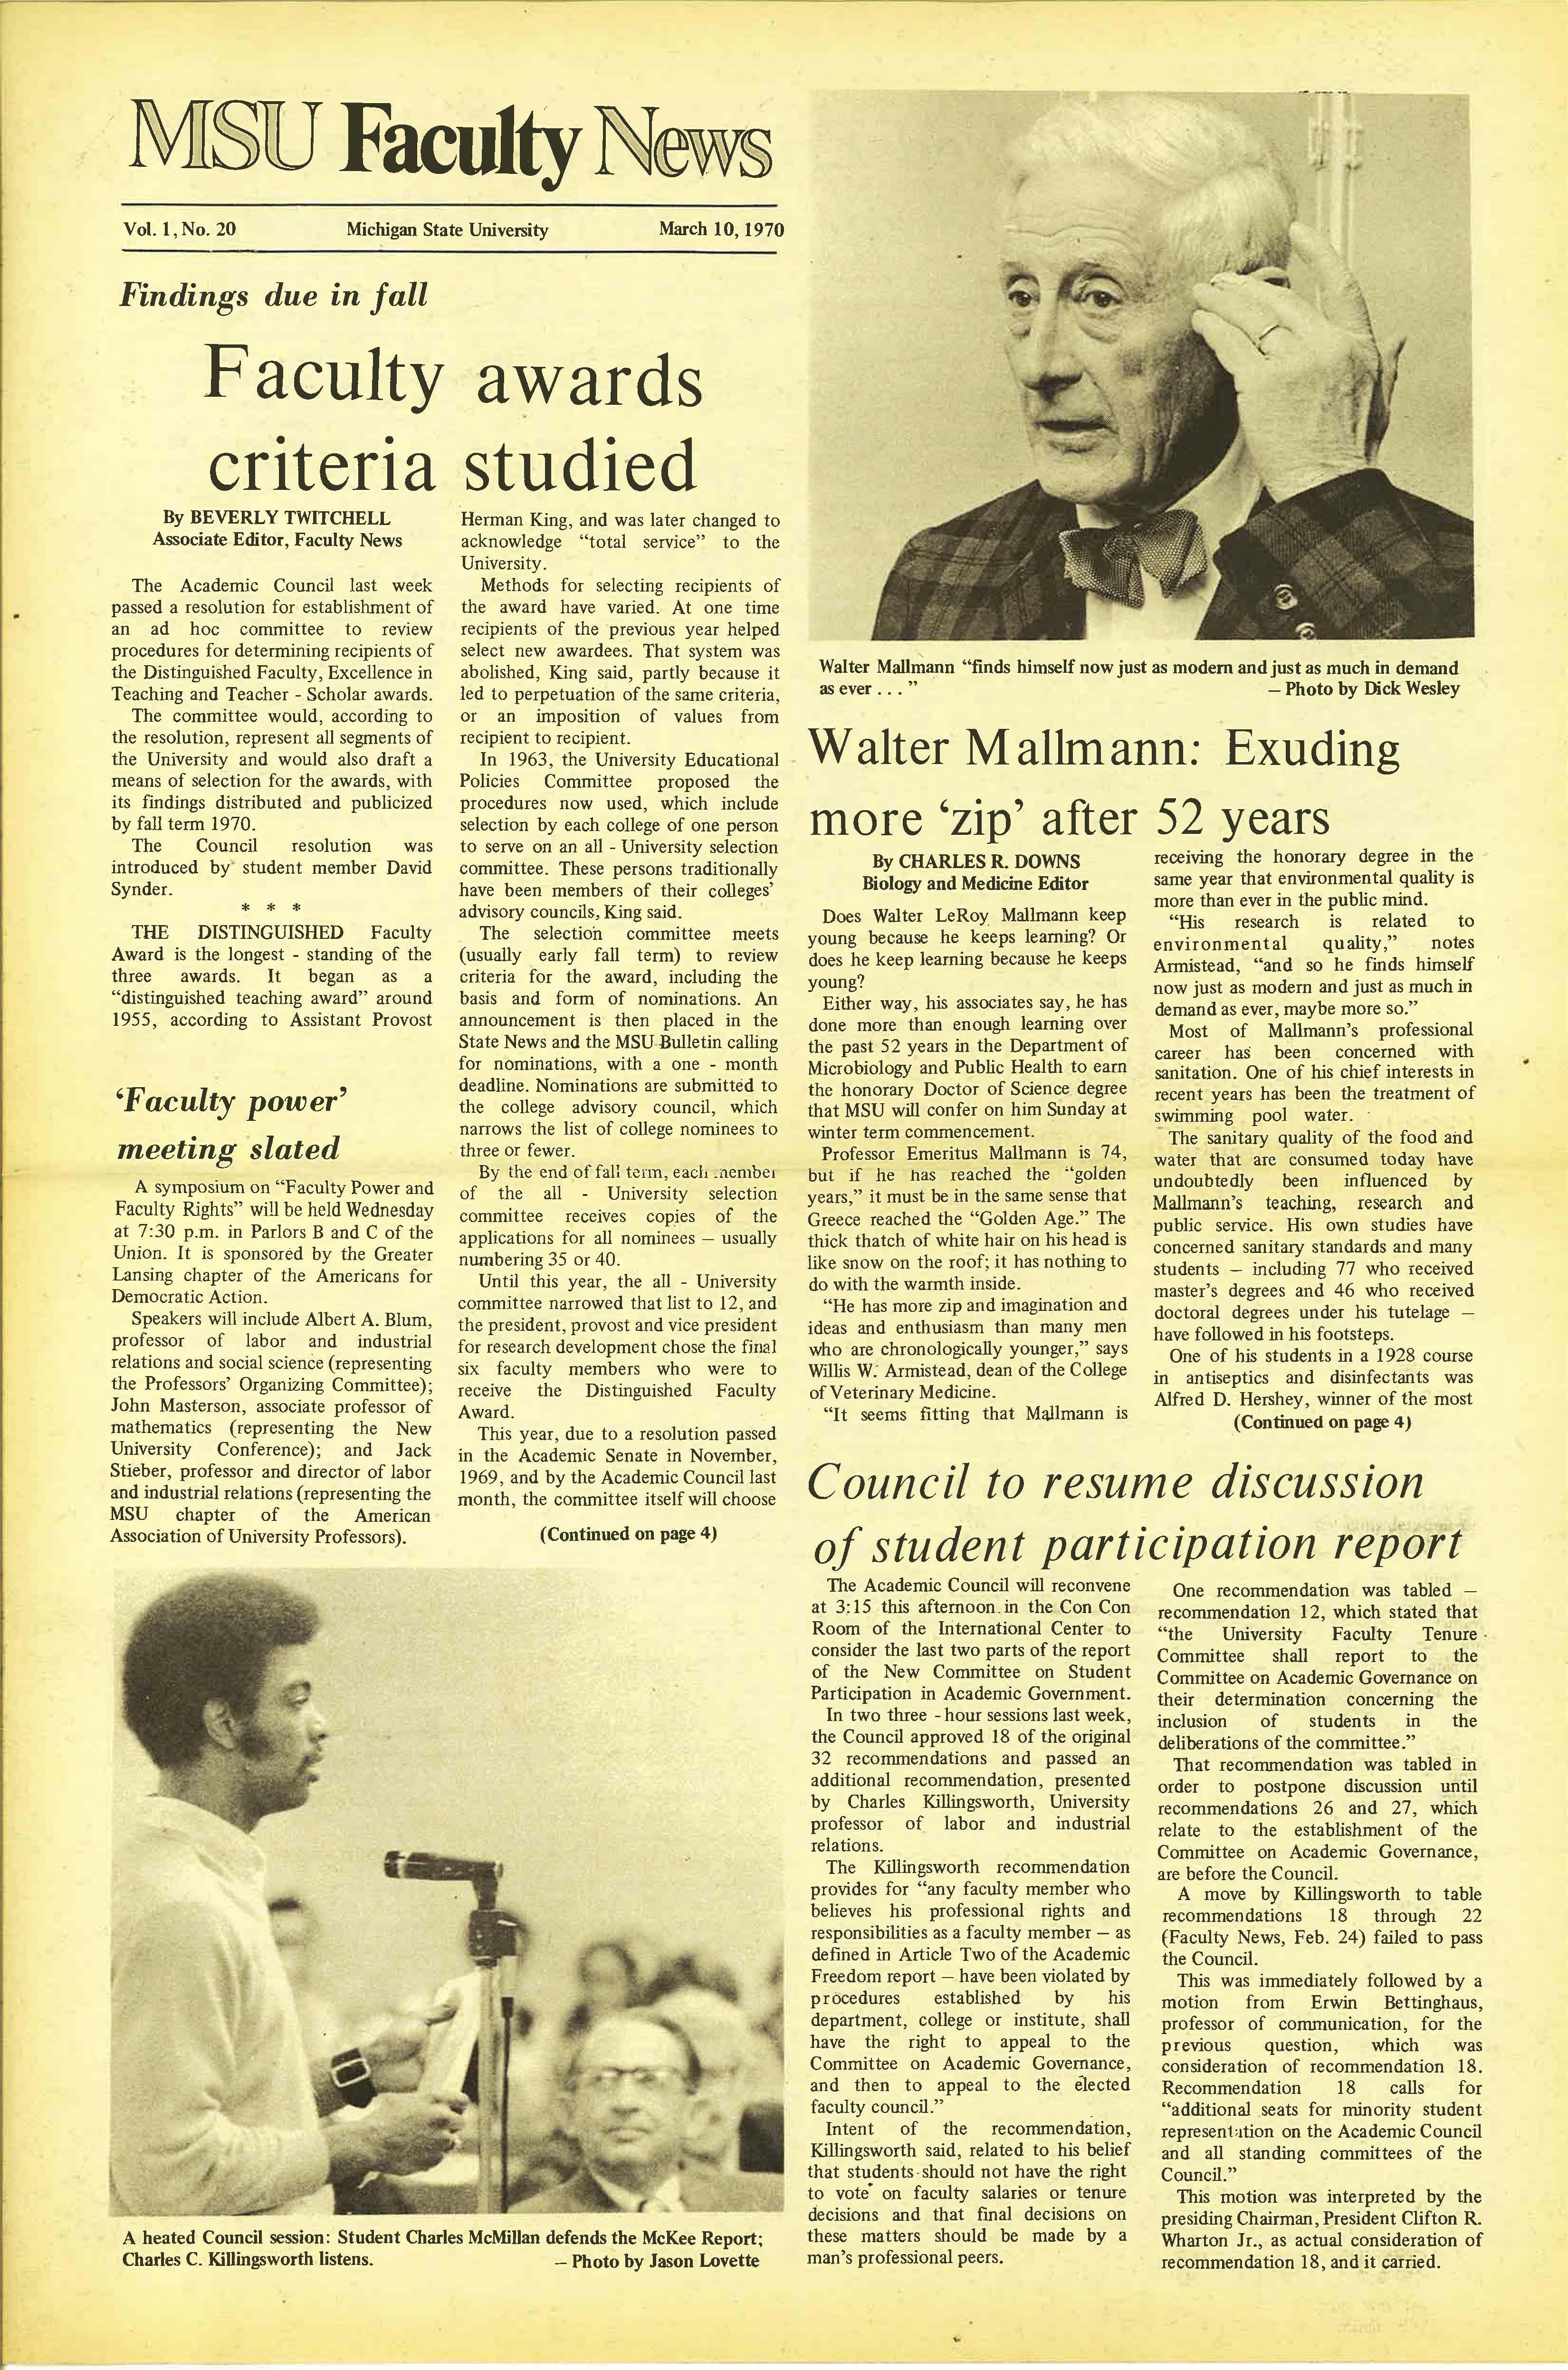 MSU News Bulletin, Vol. 1, No. 15, February 3, 1970